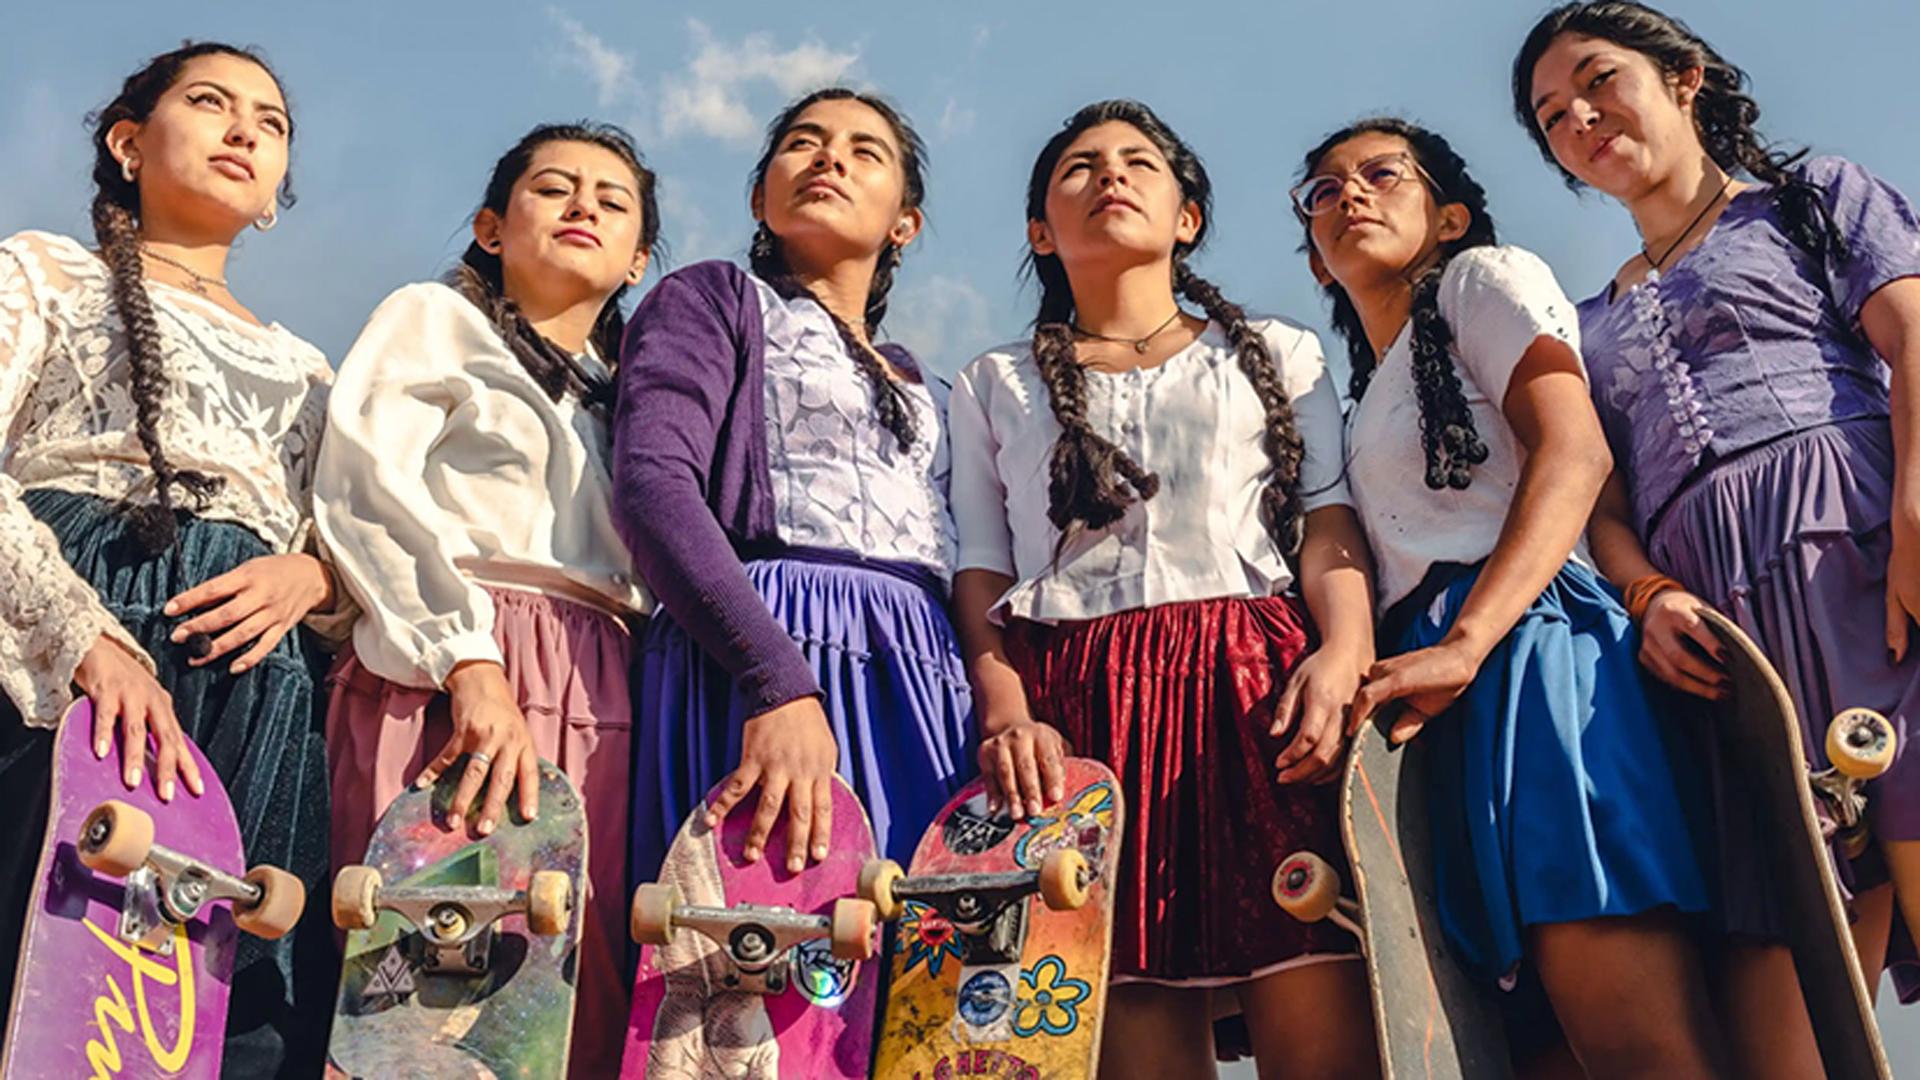 The all-female collective Imilla Skate in Bolivia